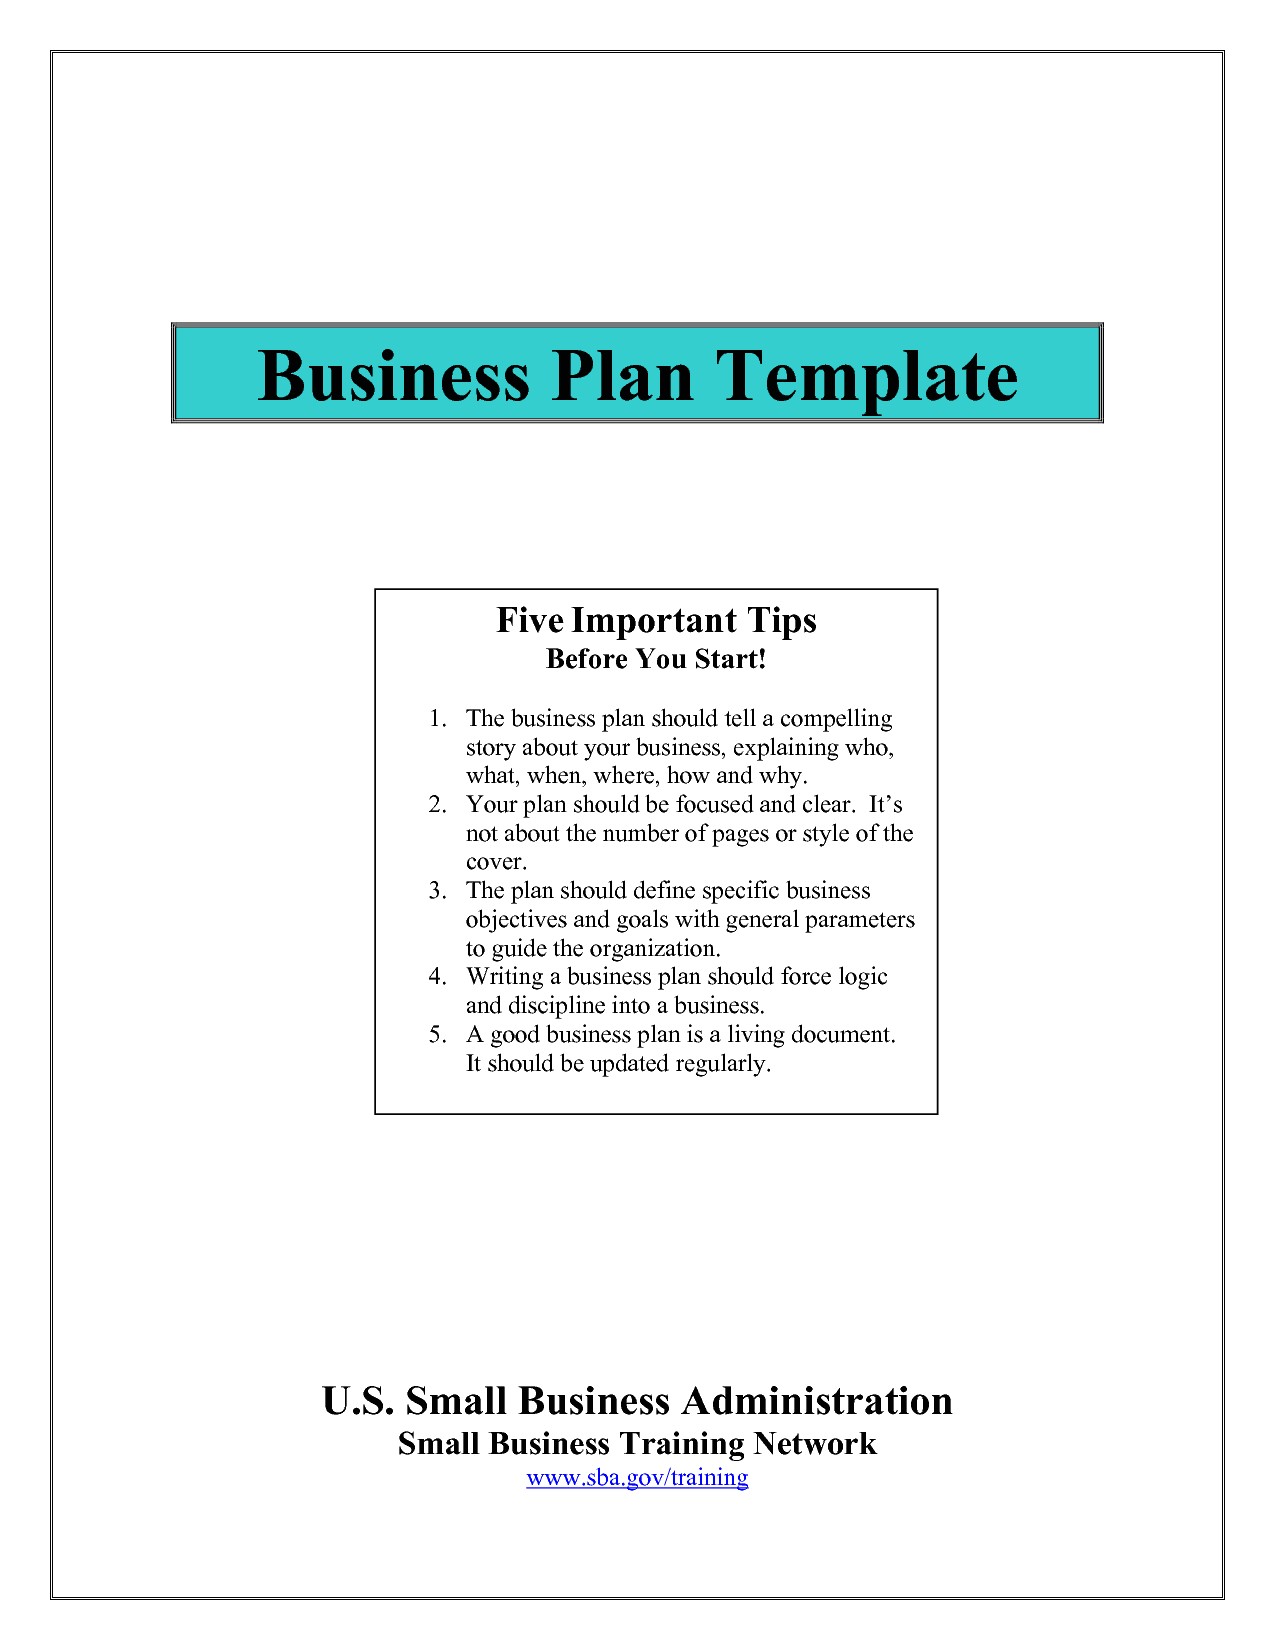 Sba Business Plan Template Pdf Sba Business Plan Template E Commerce